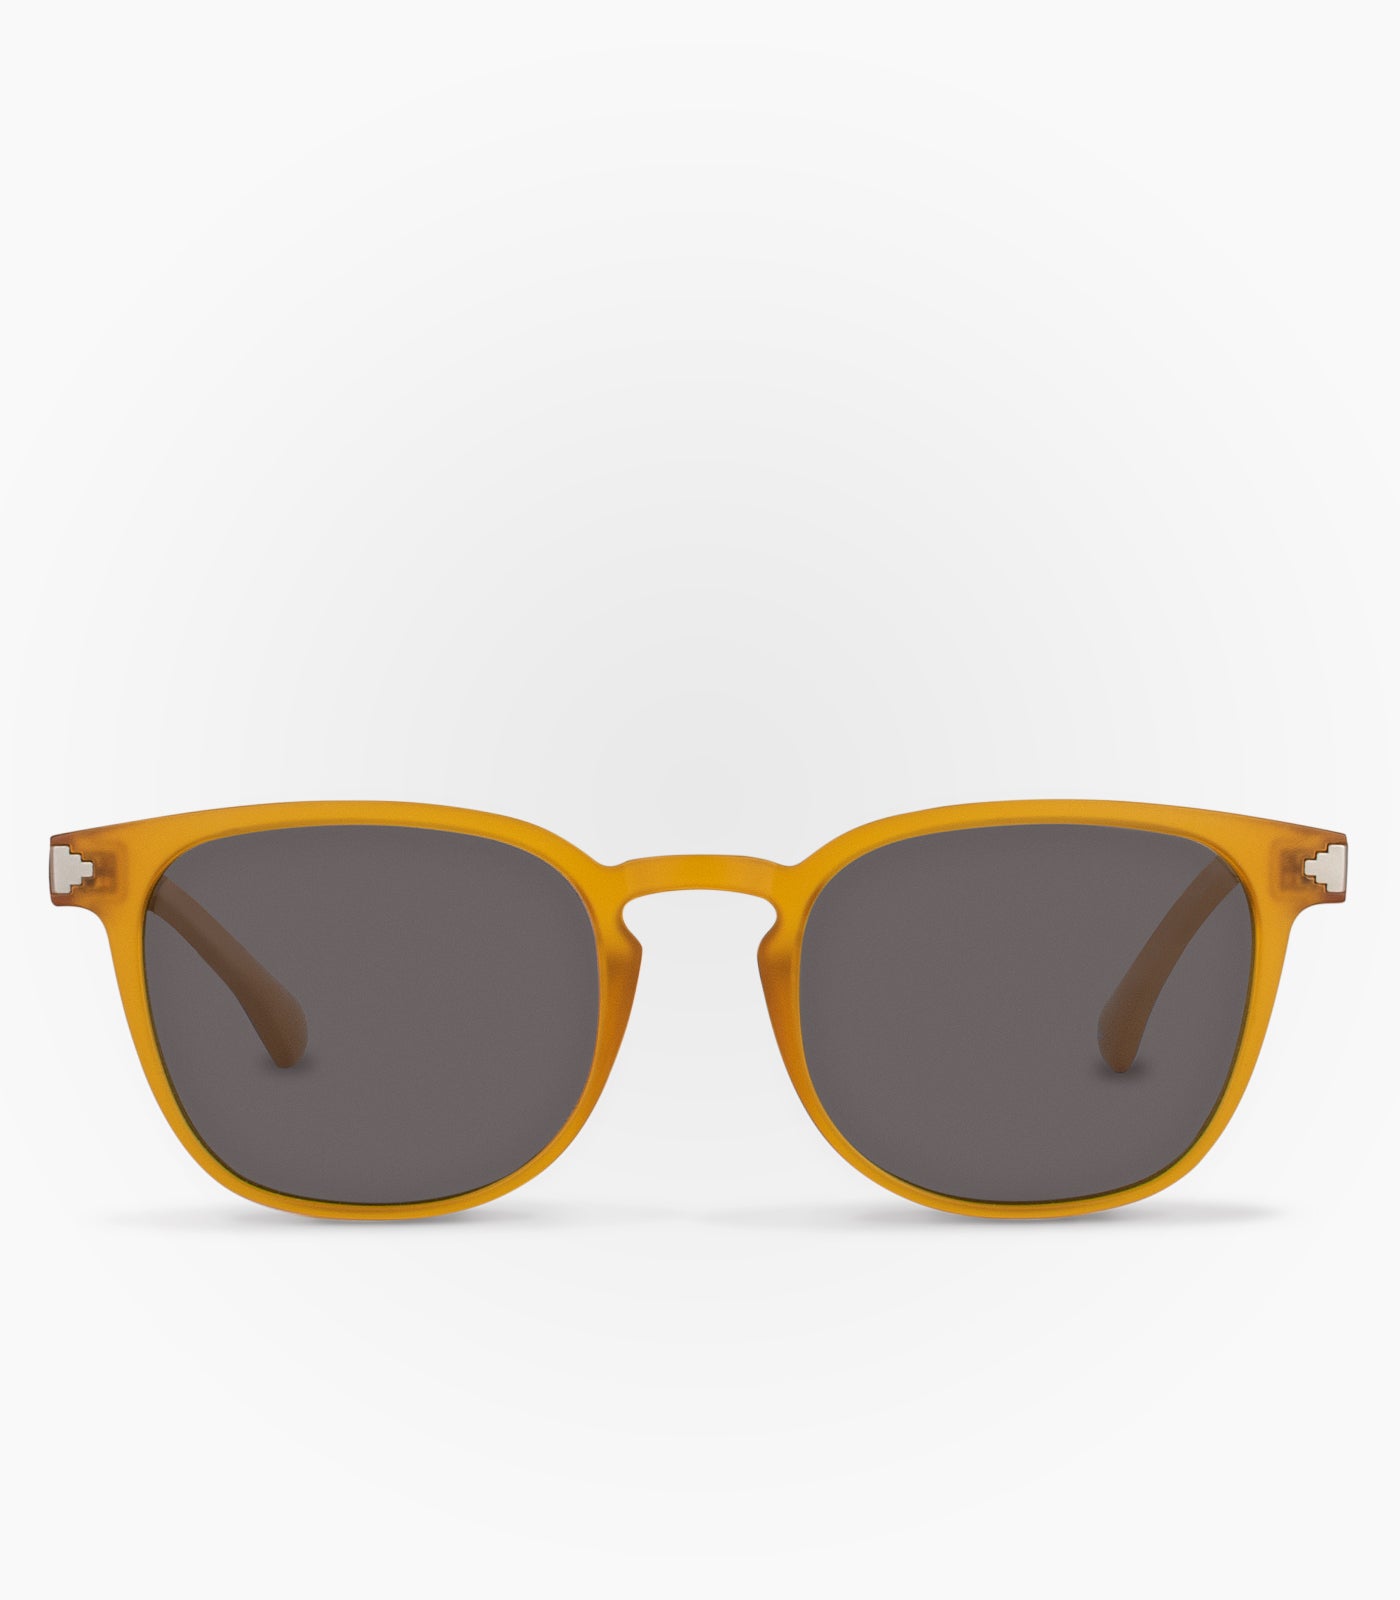 Sunglasses Breeze Mustard | Karün North America